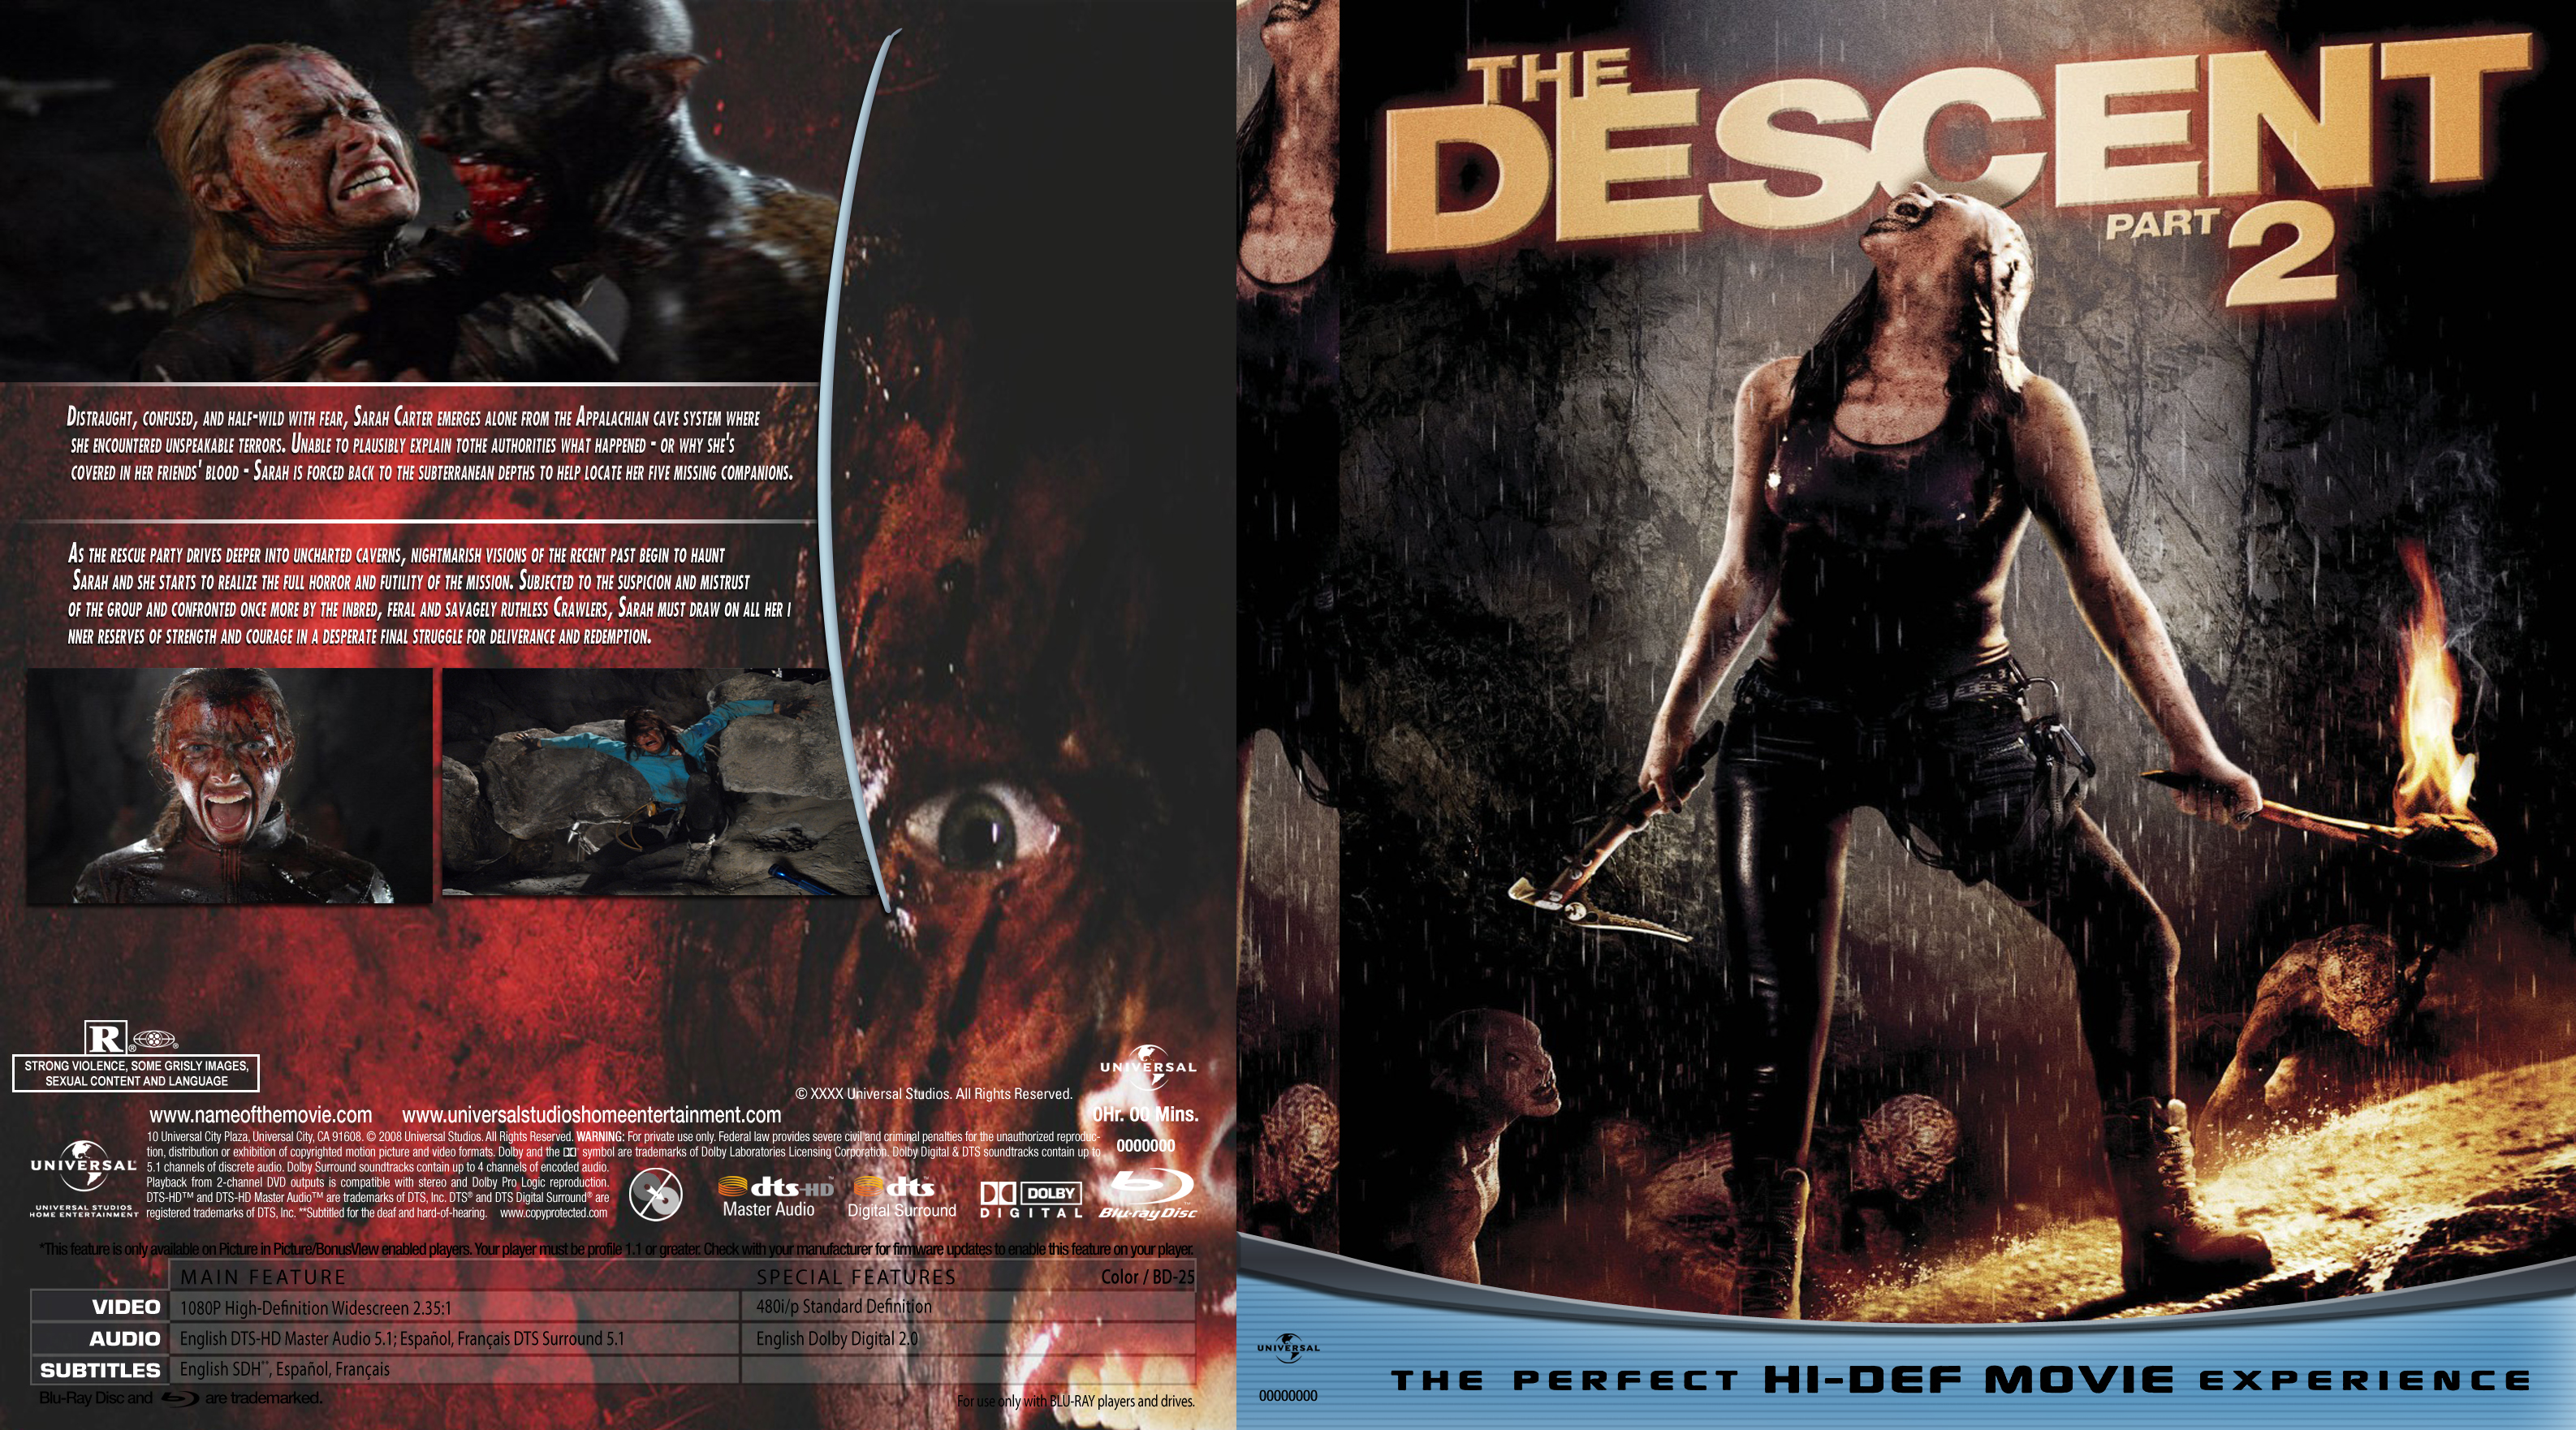  DVD Film  - Zejście 2 - The Descent Part 2.jpg